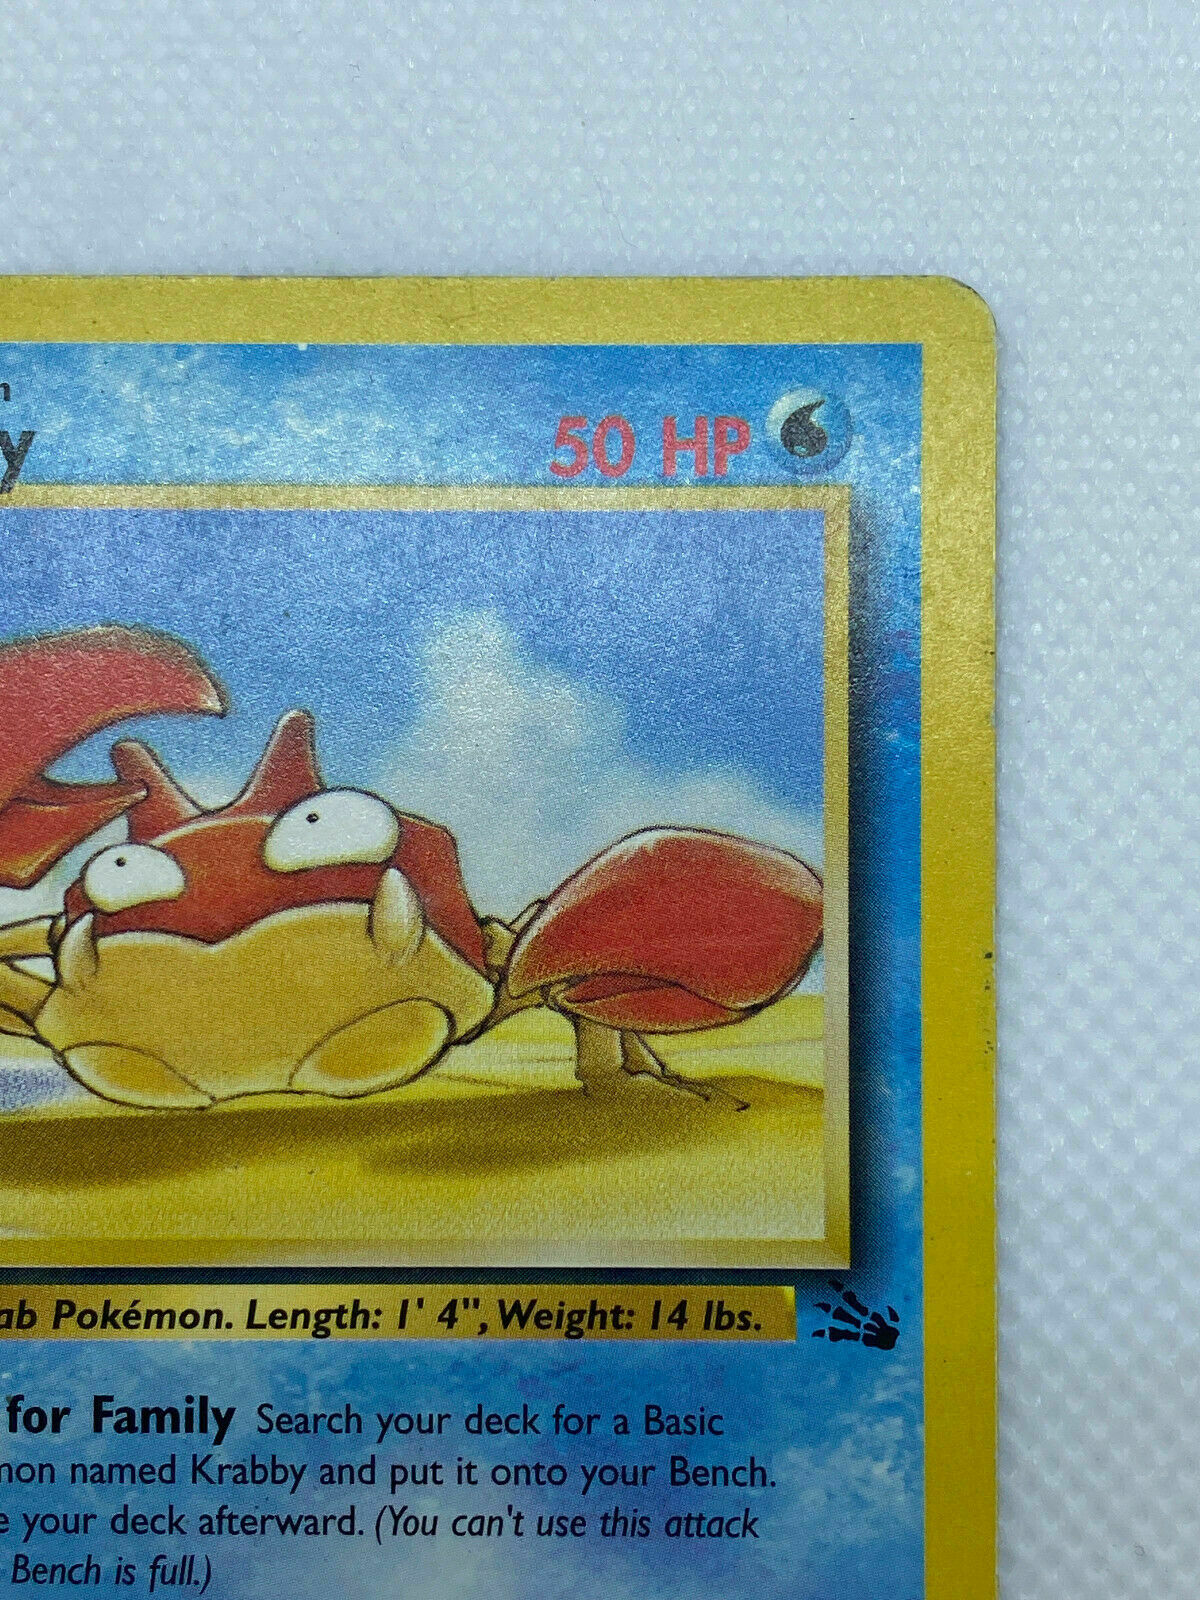 Pokémon Krabby 51/62 Trading Card Basic Pokémon All Original Fossil Set HP/MP